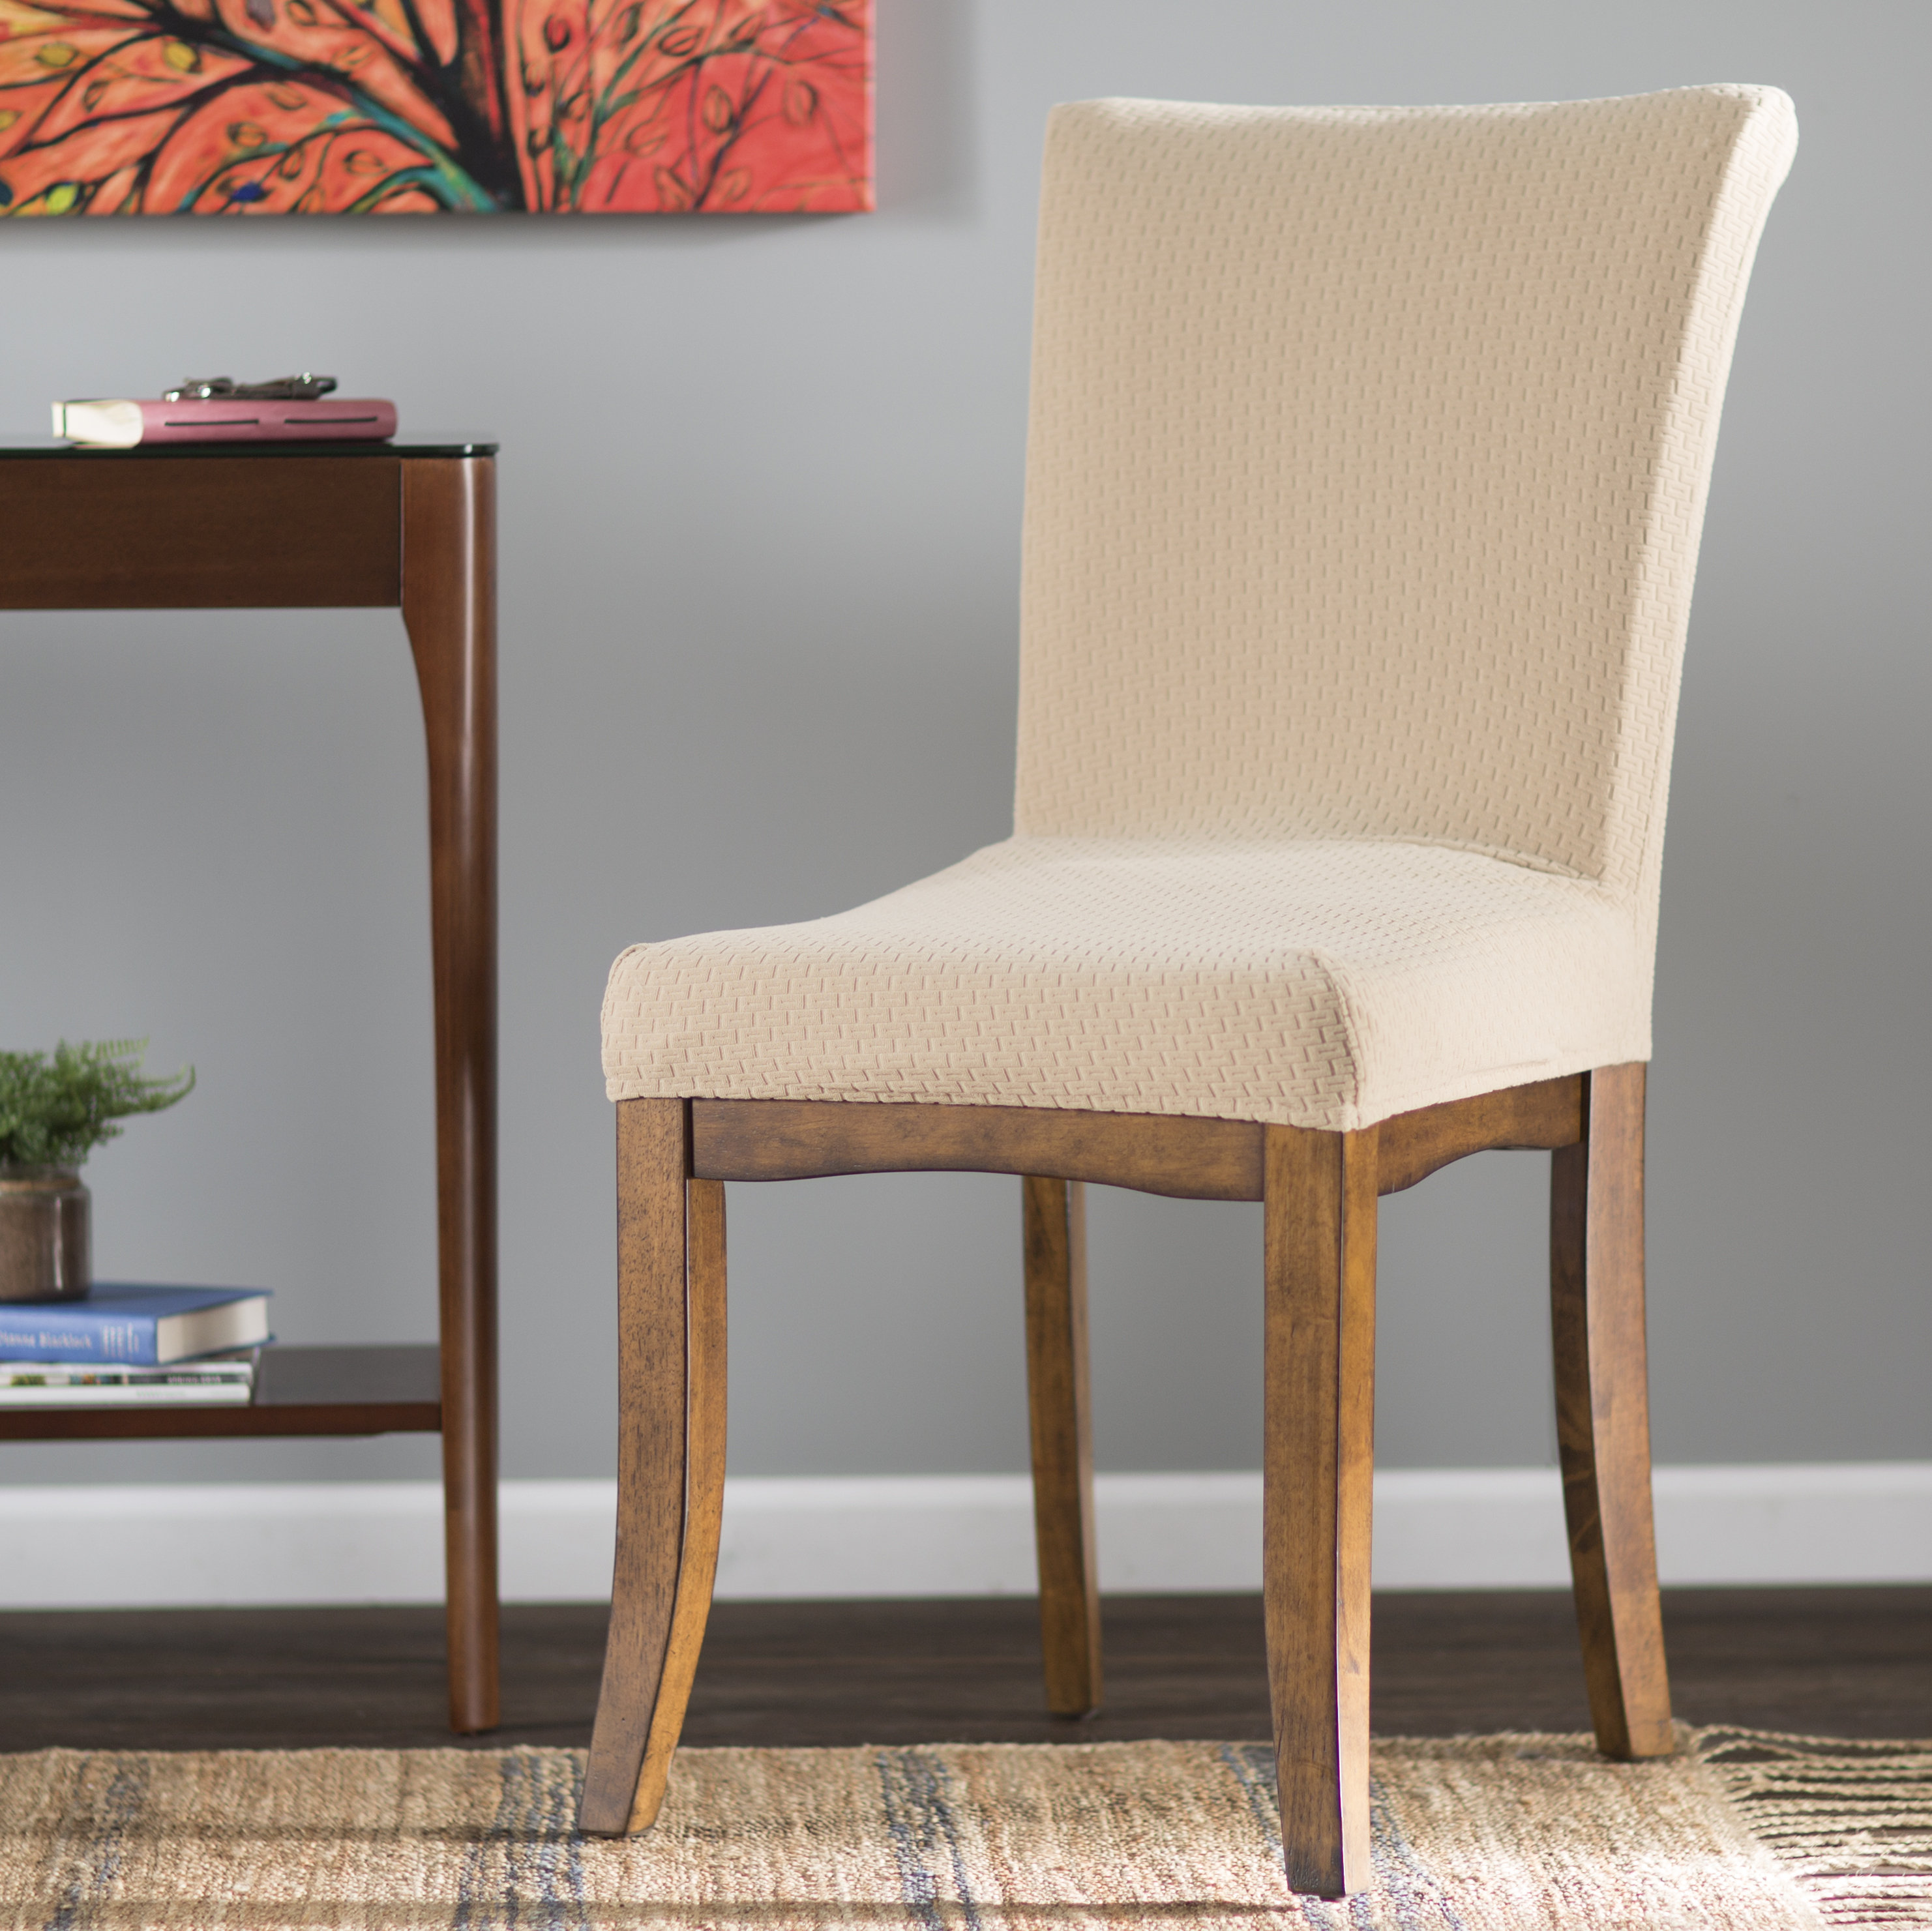 Red Barrel Studio Dining Room Chair Slipcover Reviews Wayfair